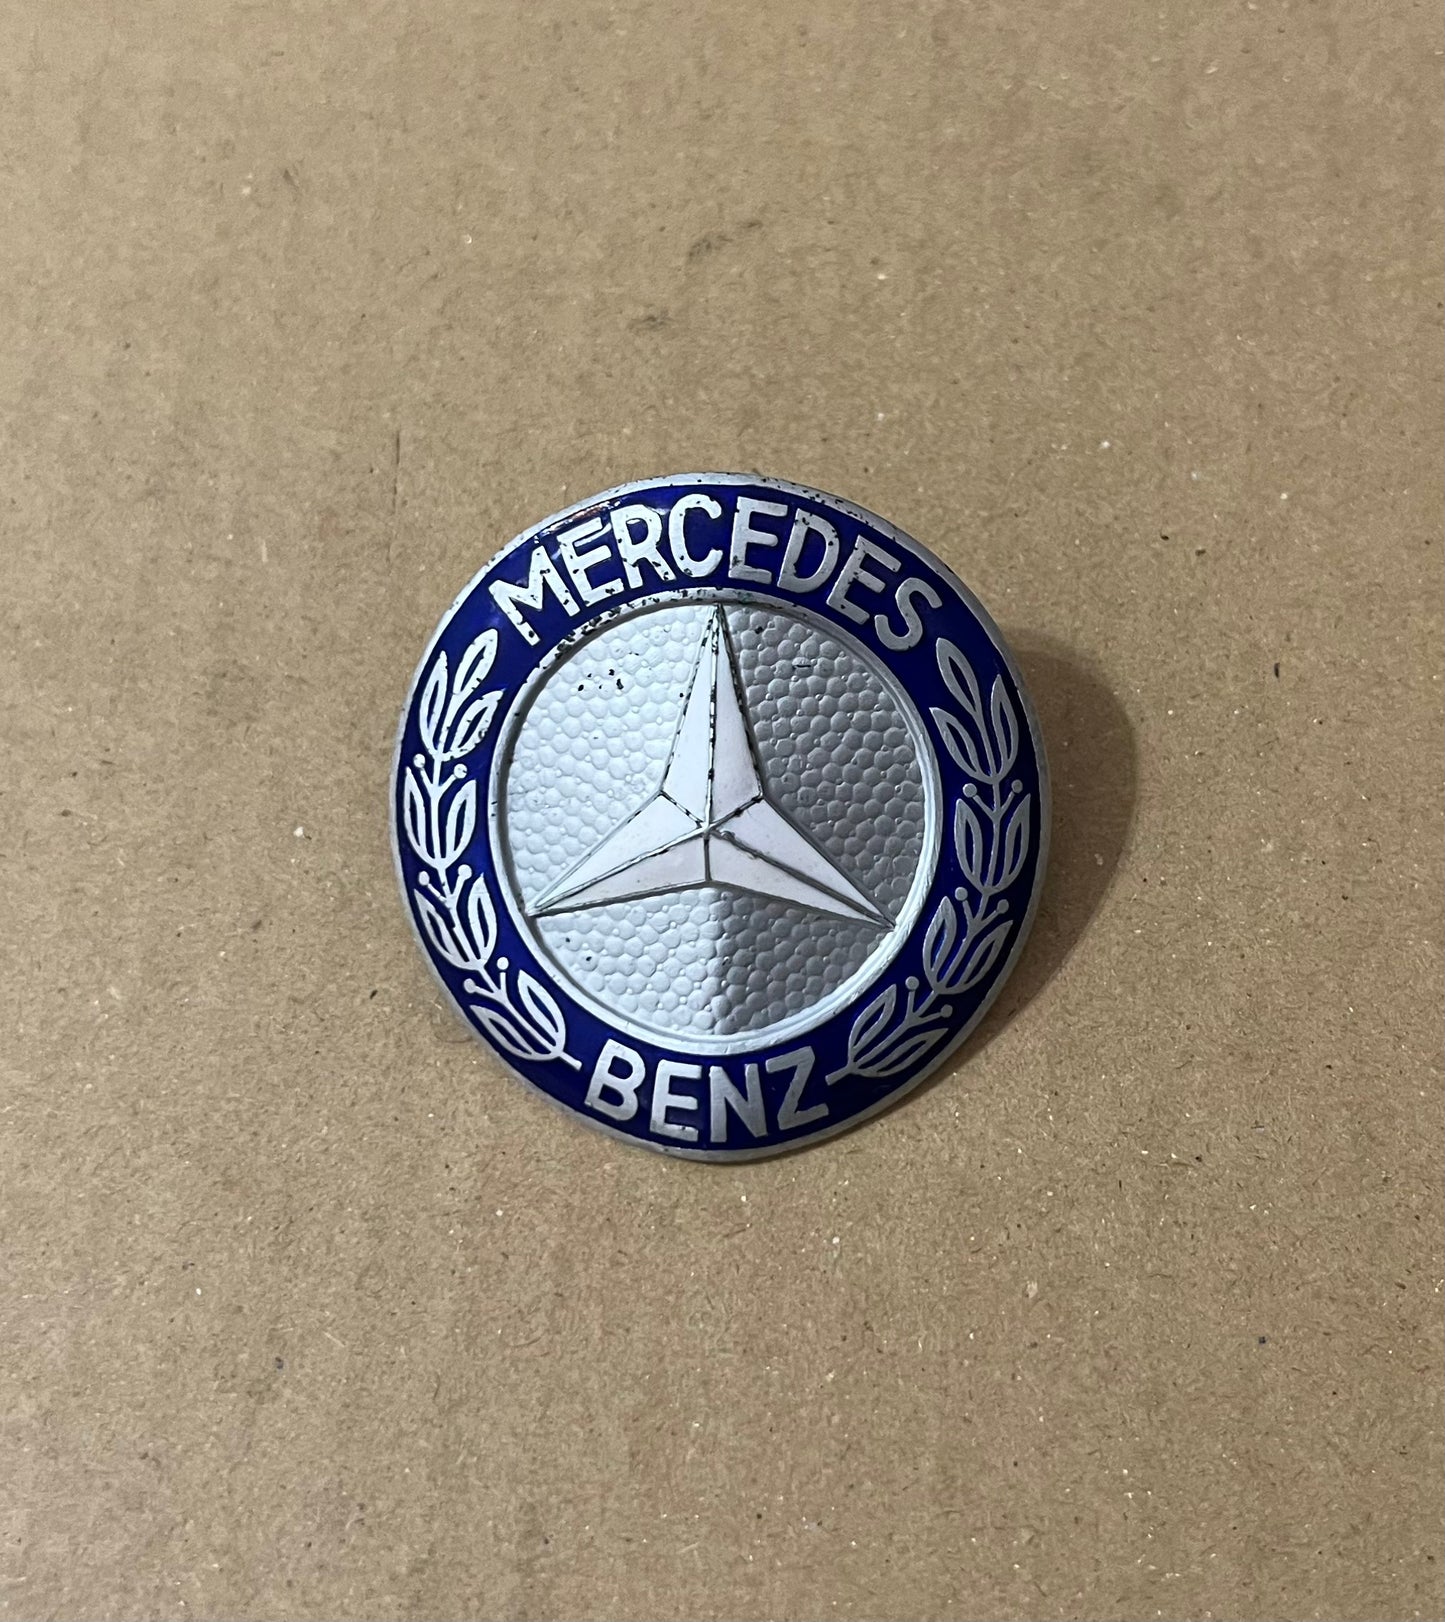 Used Mercedes-Benz Front Grille Emblem W108 W109 W110 W111